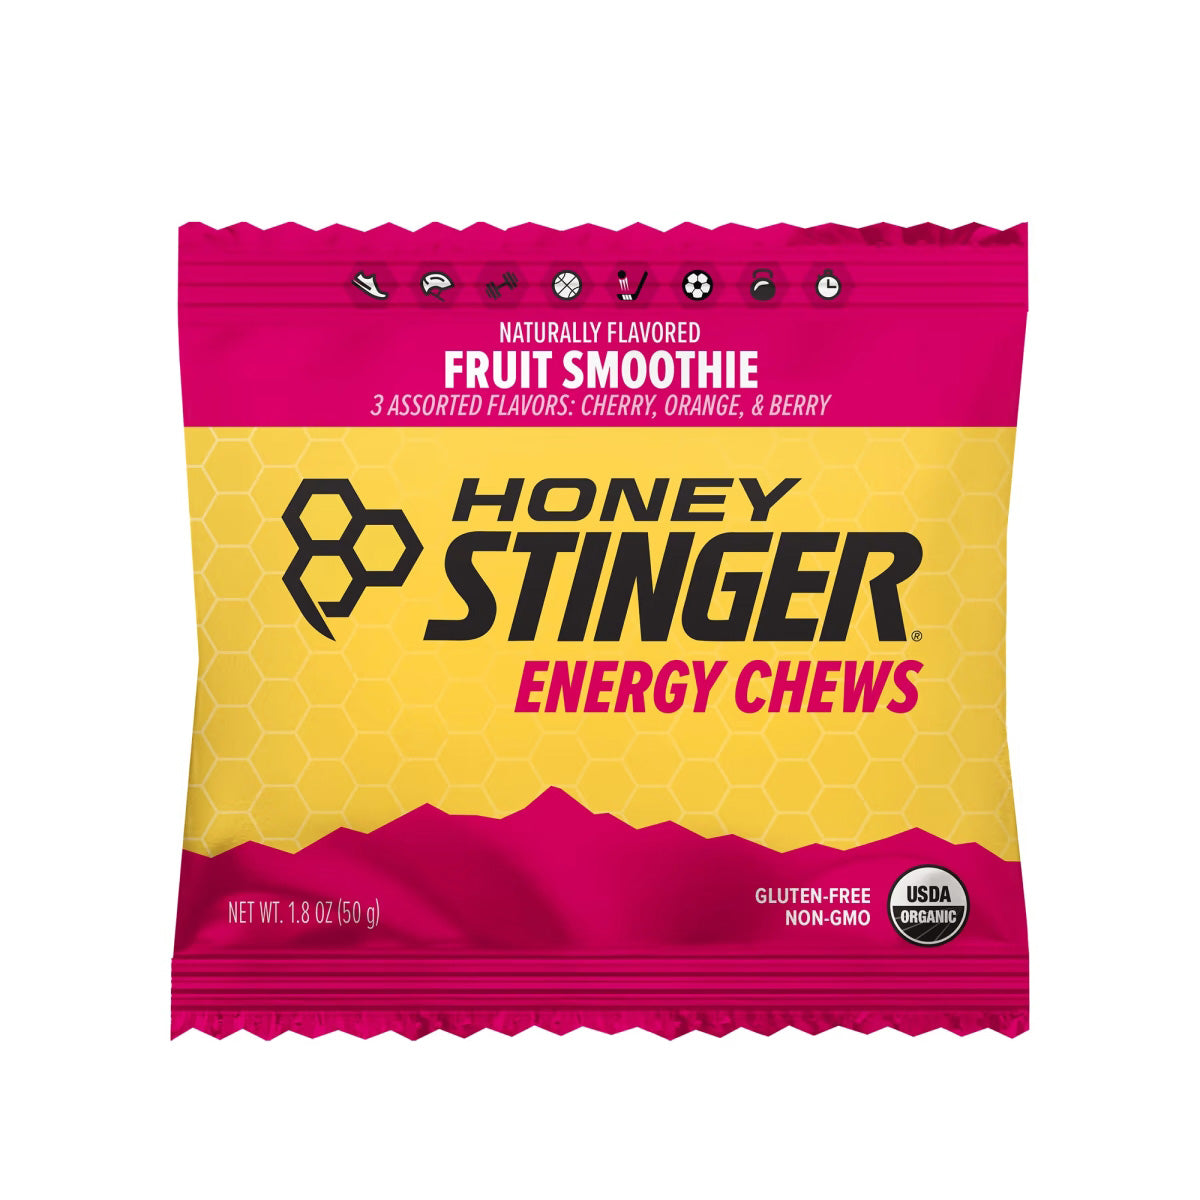 Honey Stinger energy chews hiking snack